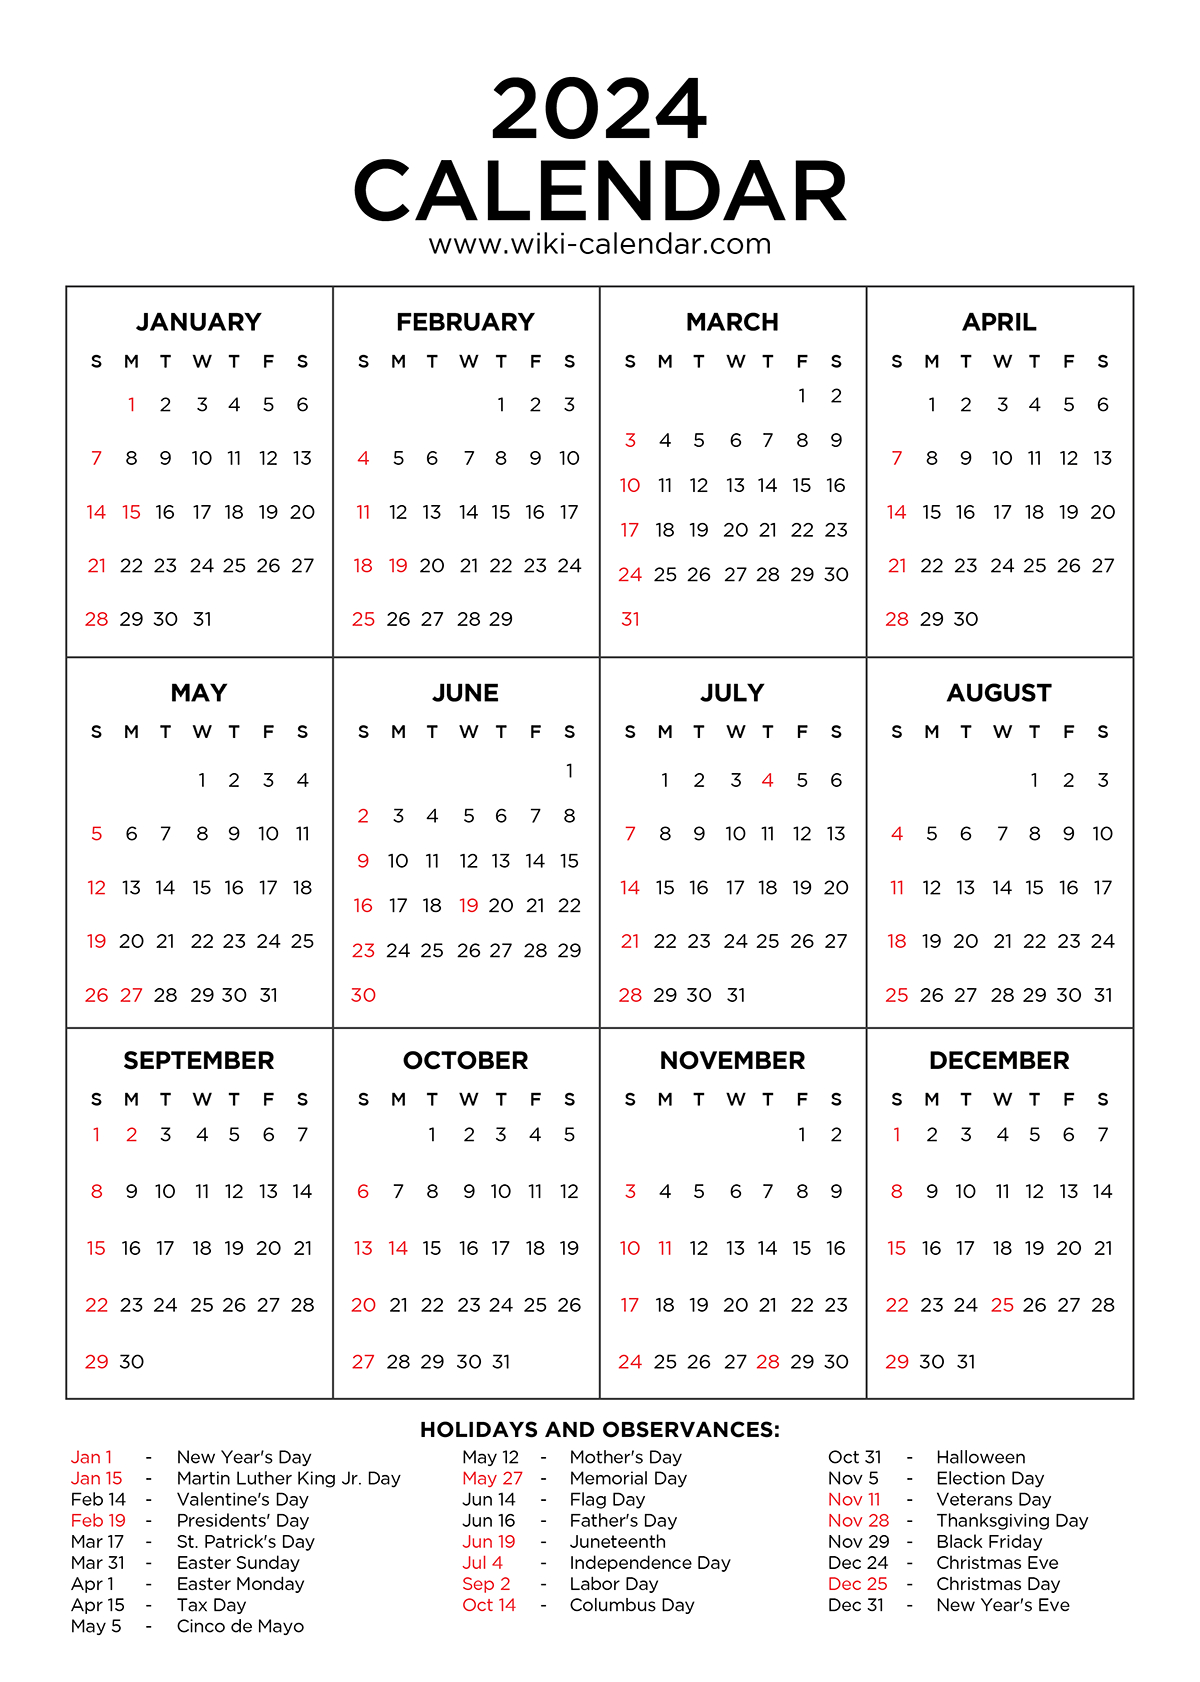 Year 2024 Calendar Printable With Holidays - Wiki Calendar | 2024 Year Calendar With Holidays